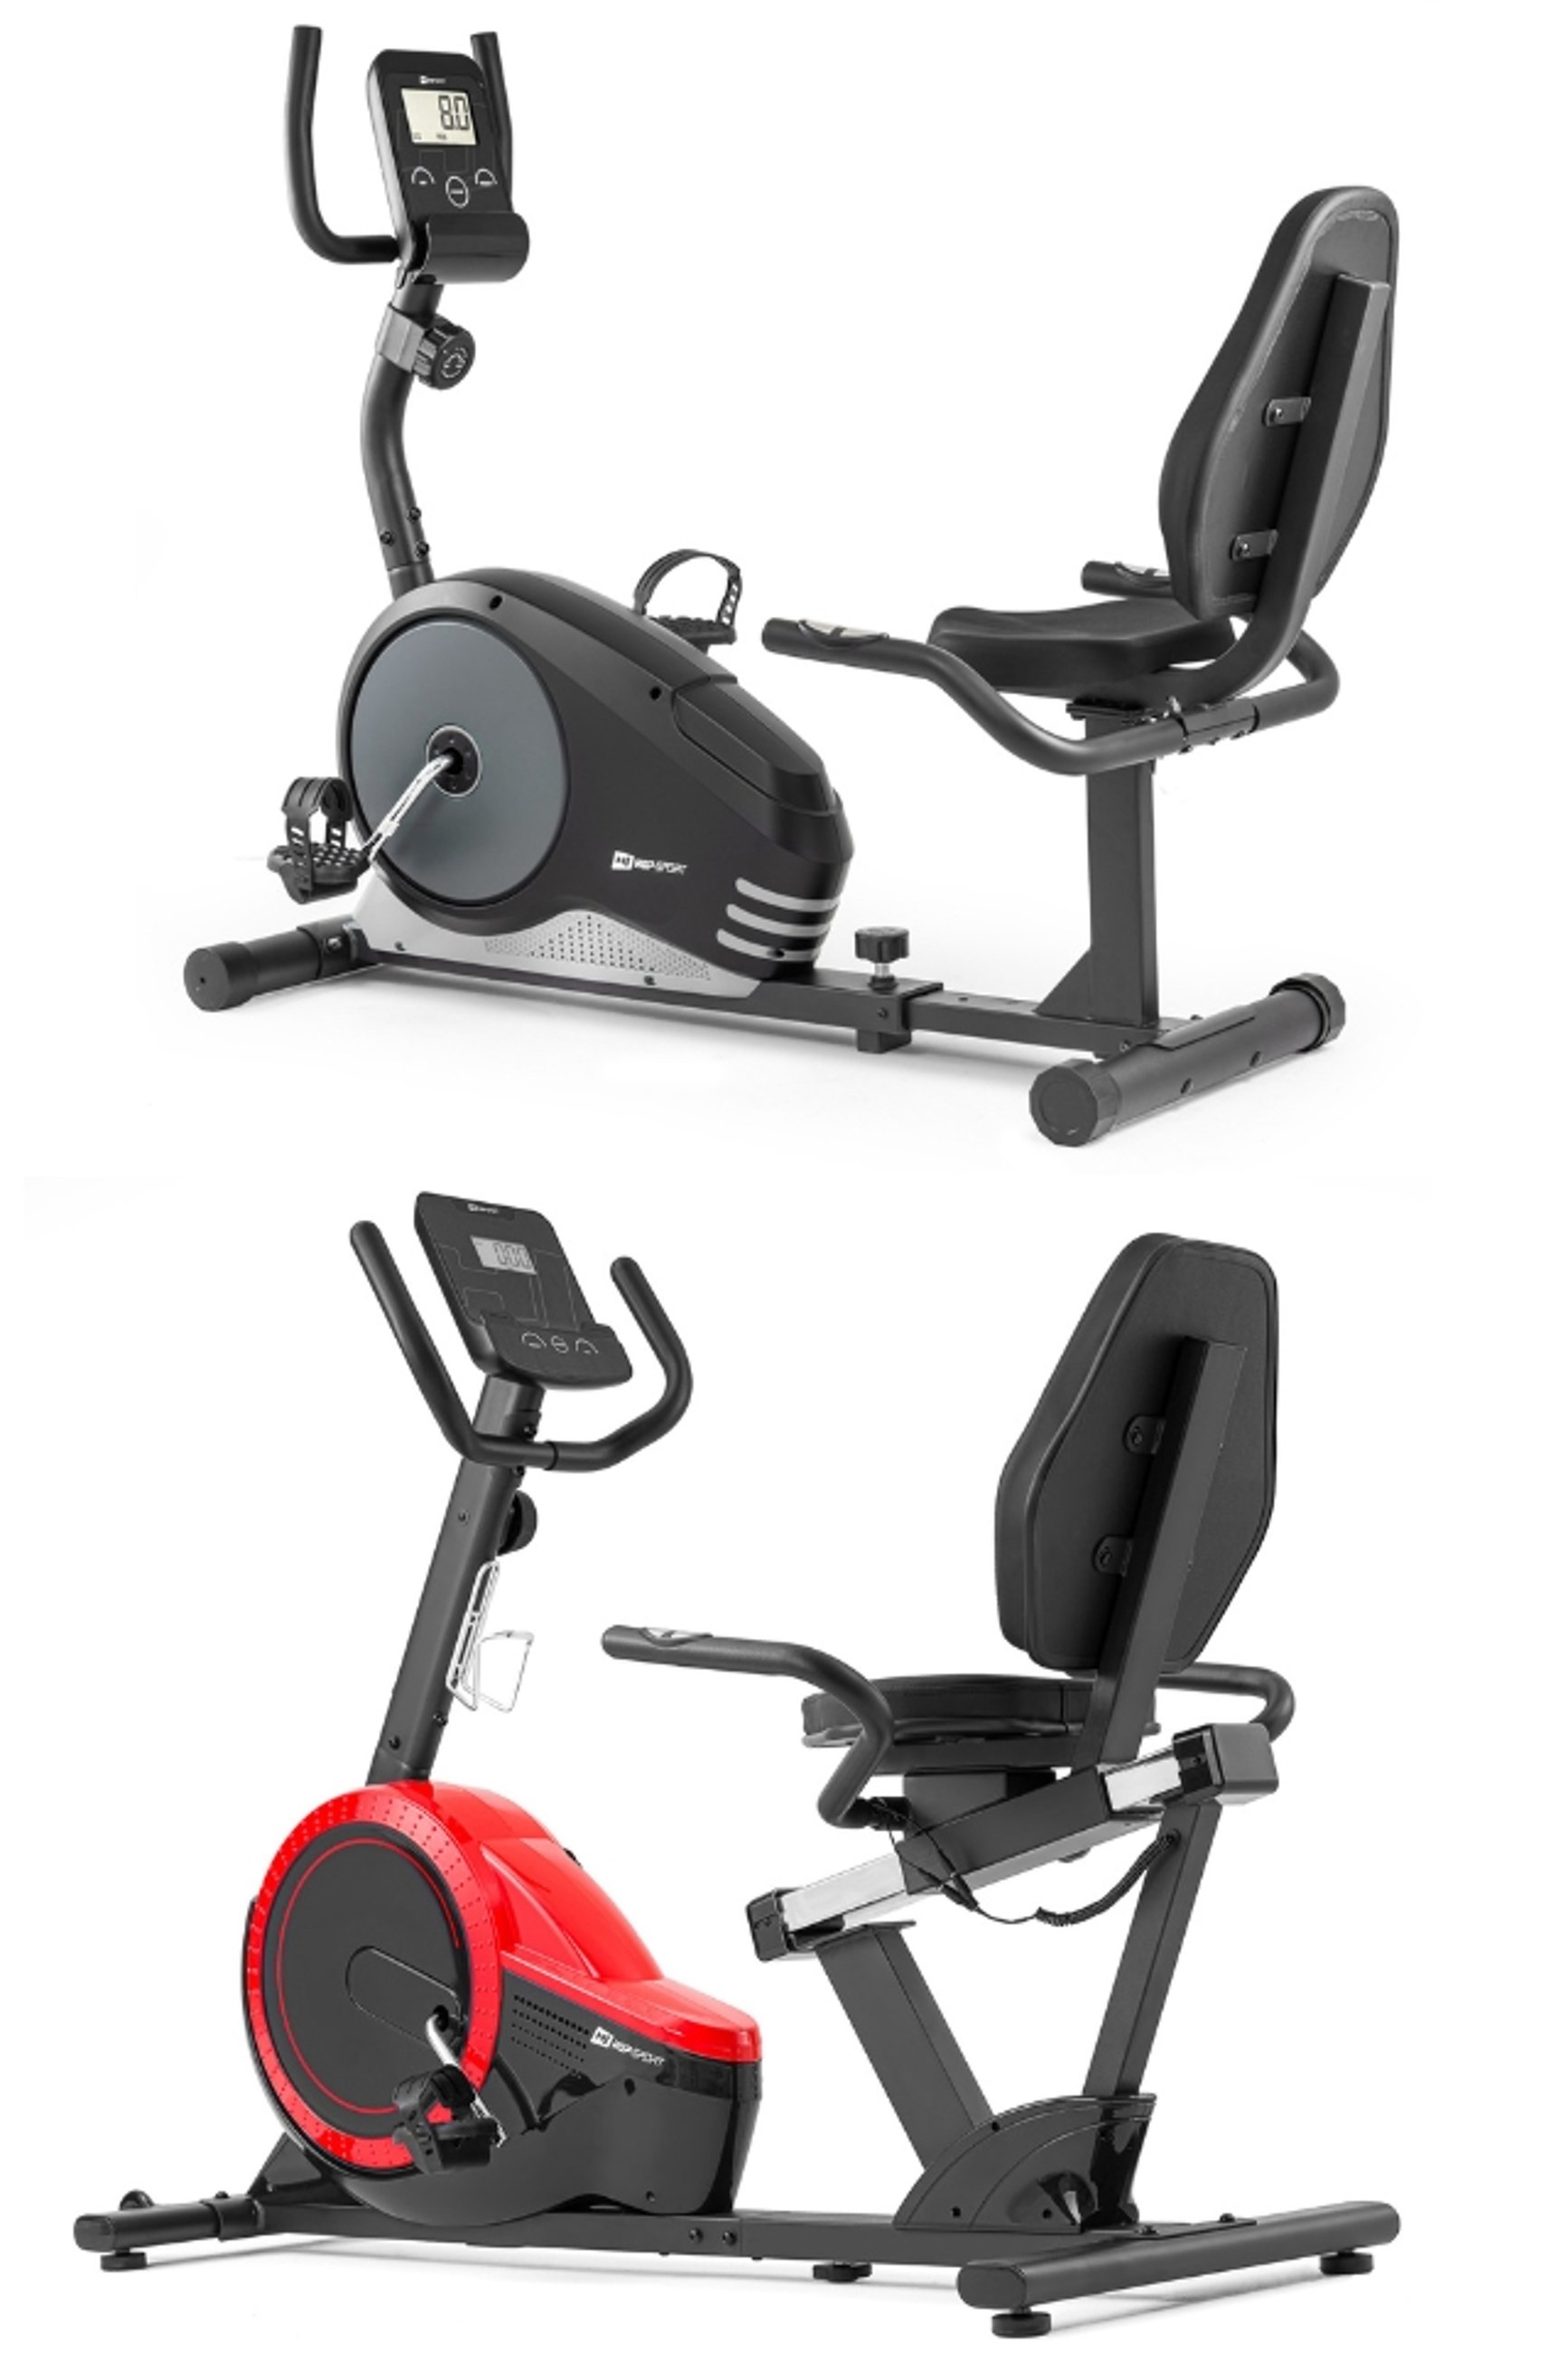 rowery poziome Hop-Sport, modele HS-040L Root srebrny i HS-060L Pulse czerwony